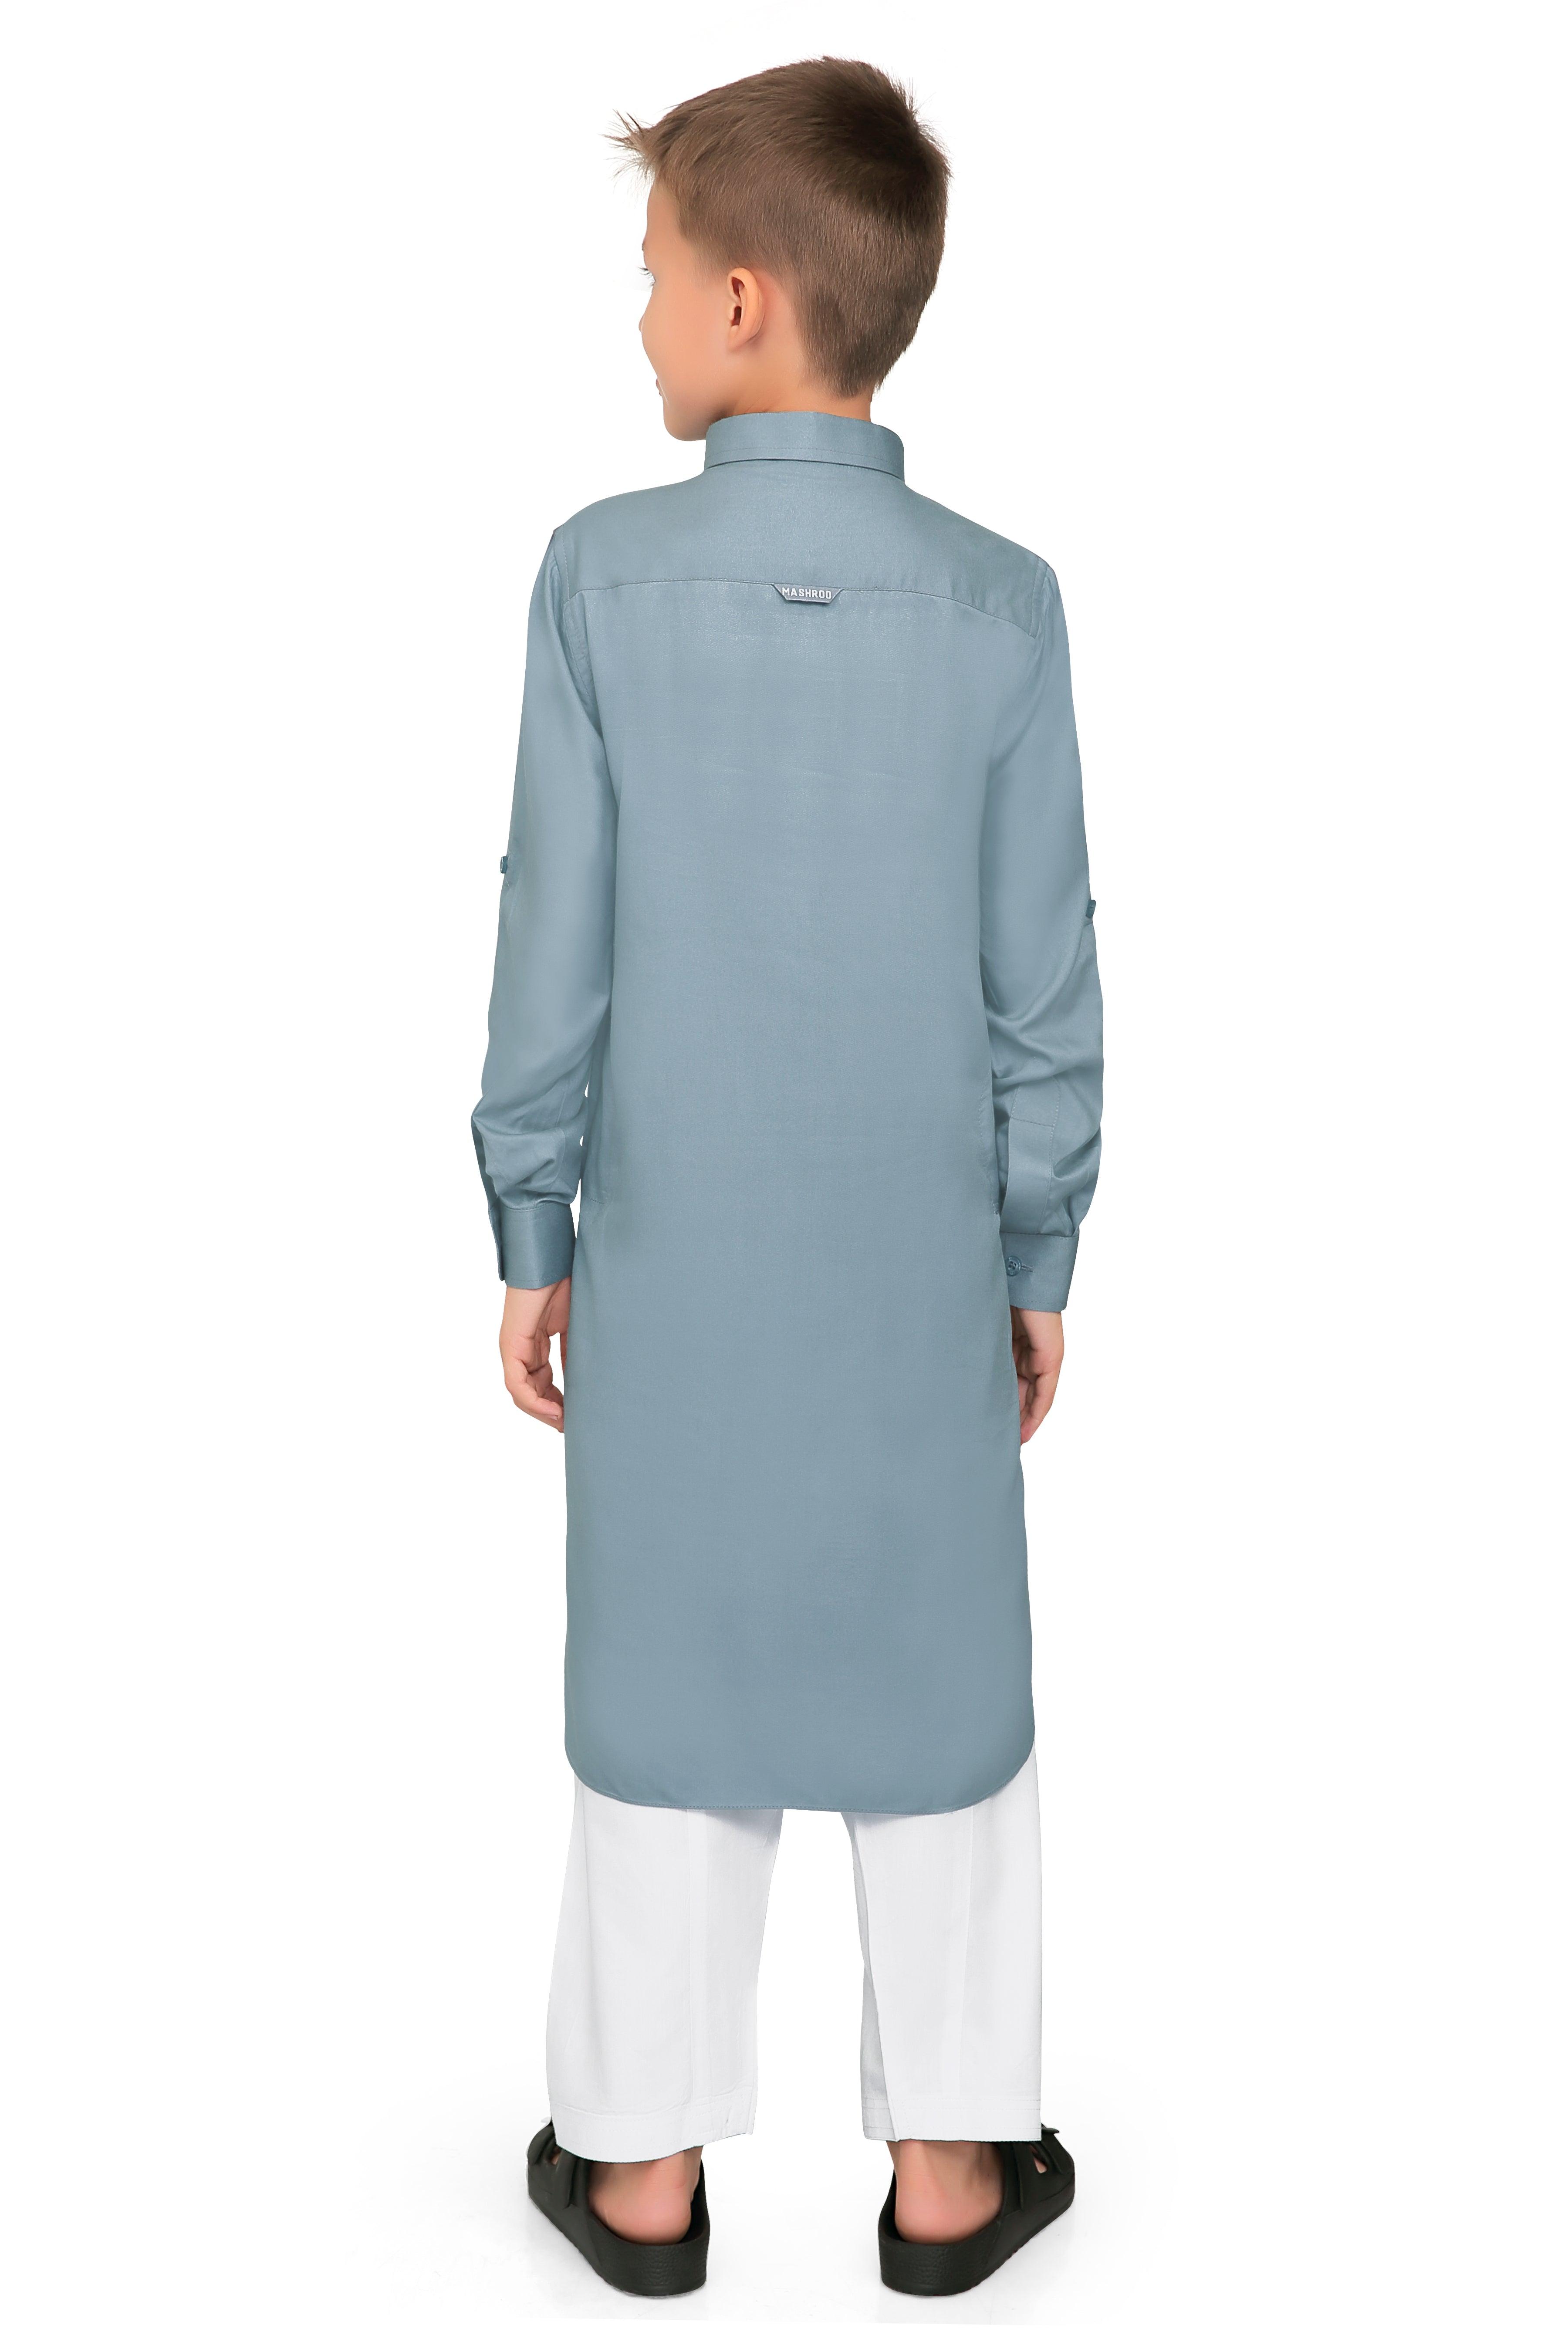 Oday Grey Pathani Suit for Kids - Mashroo